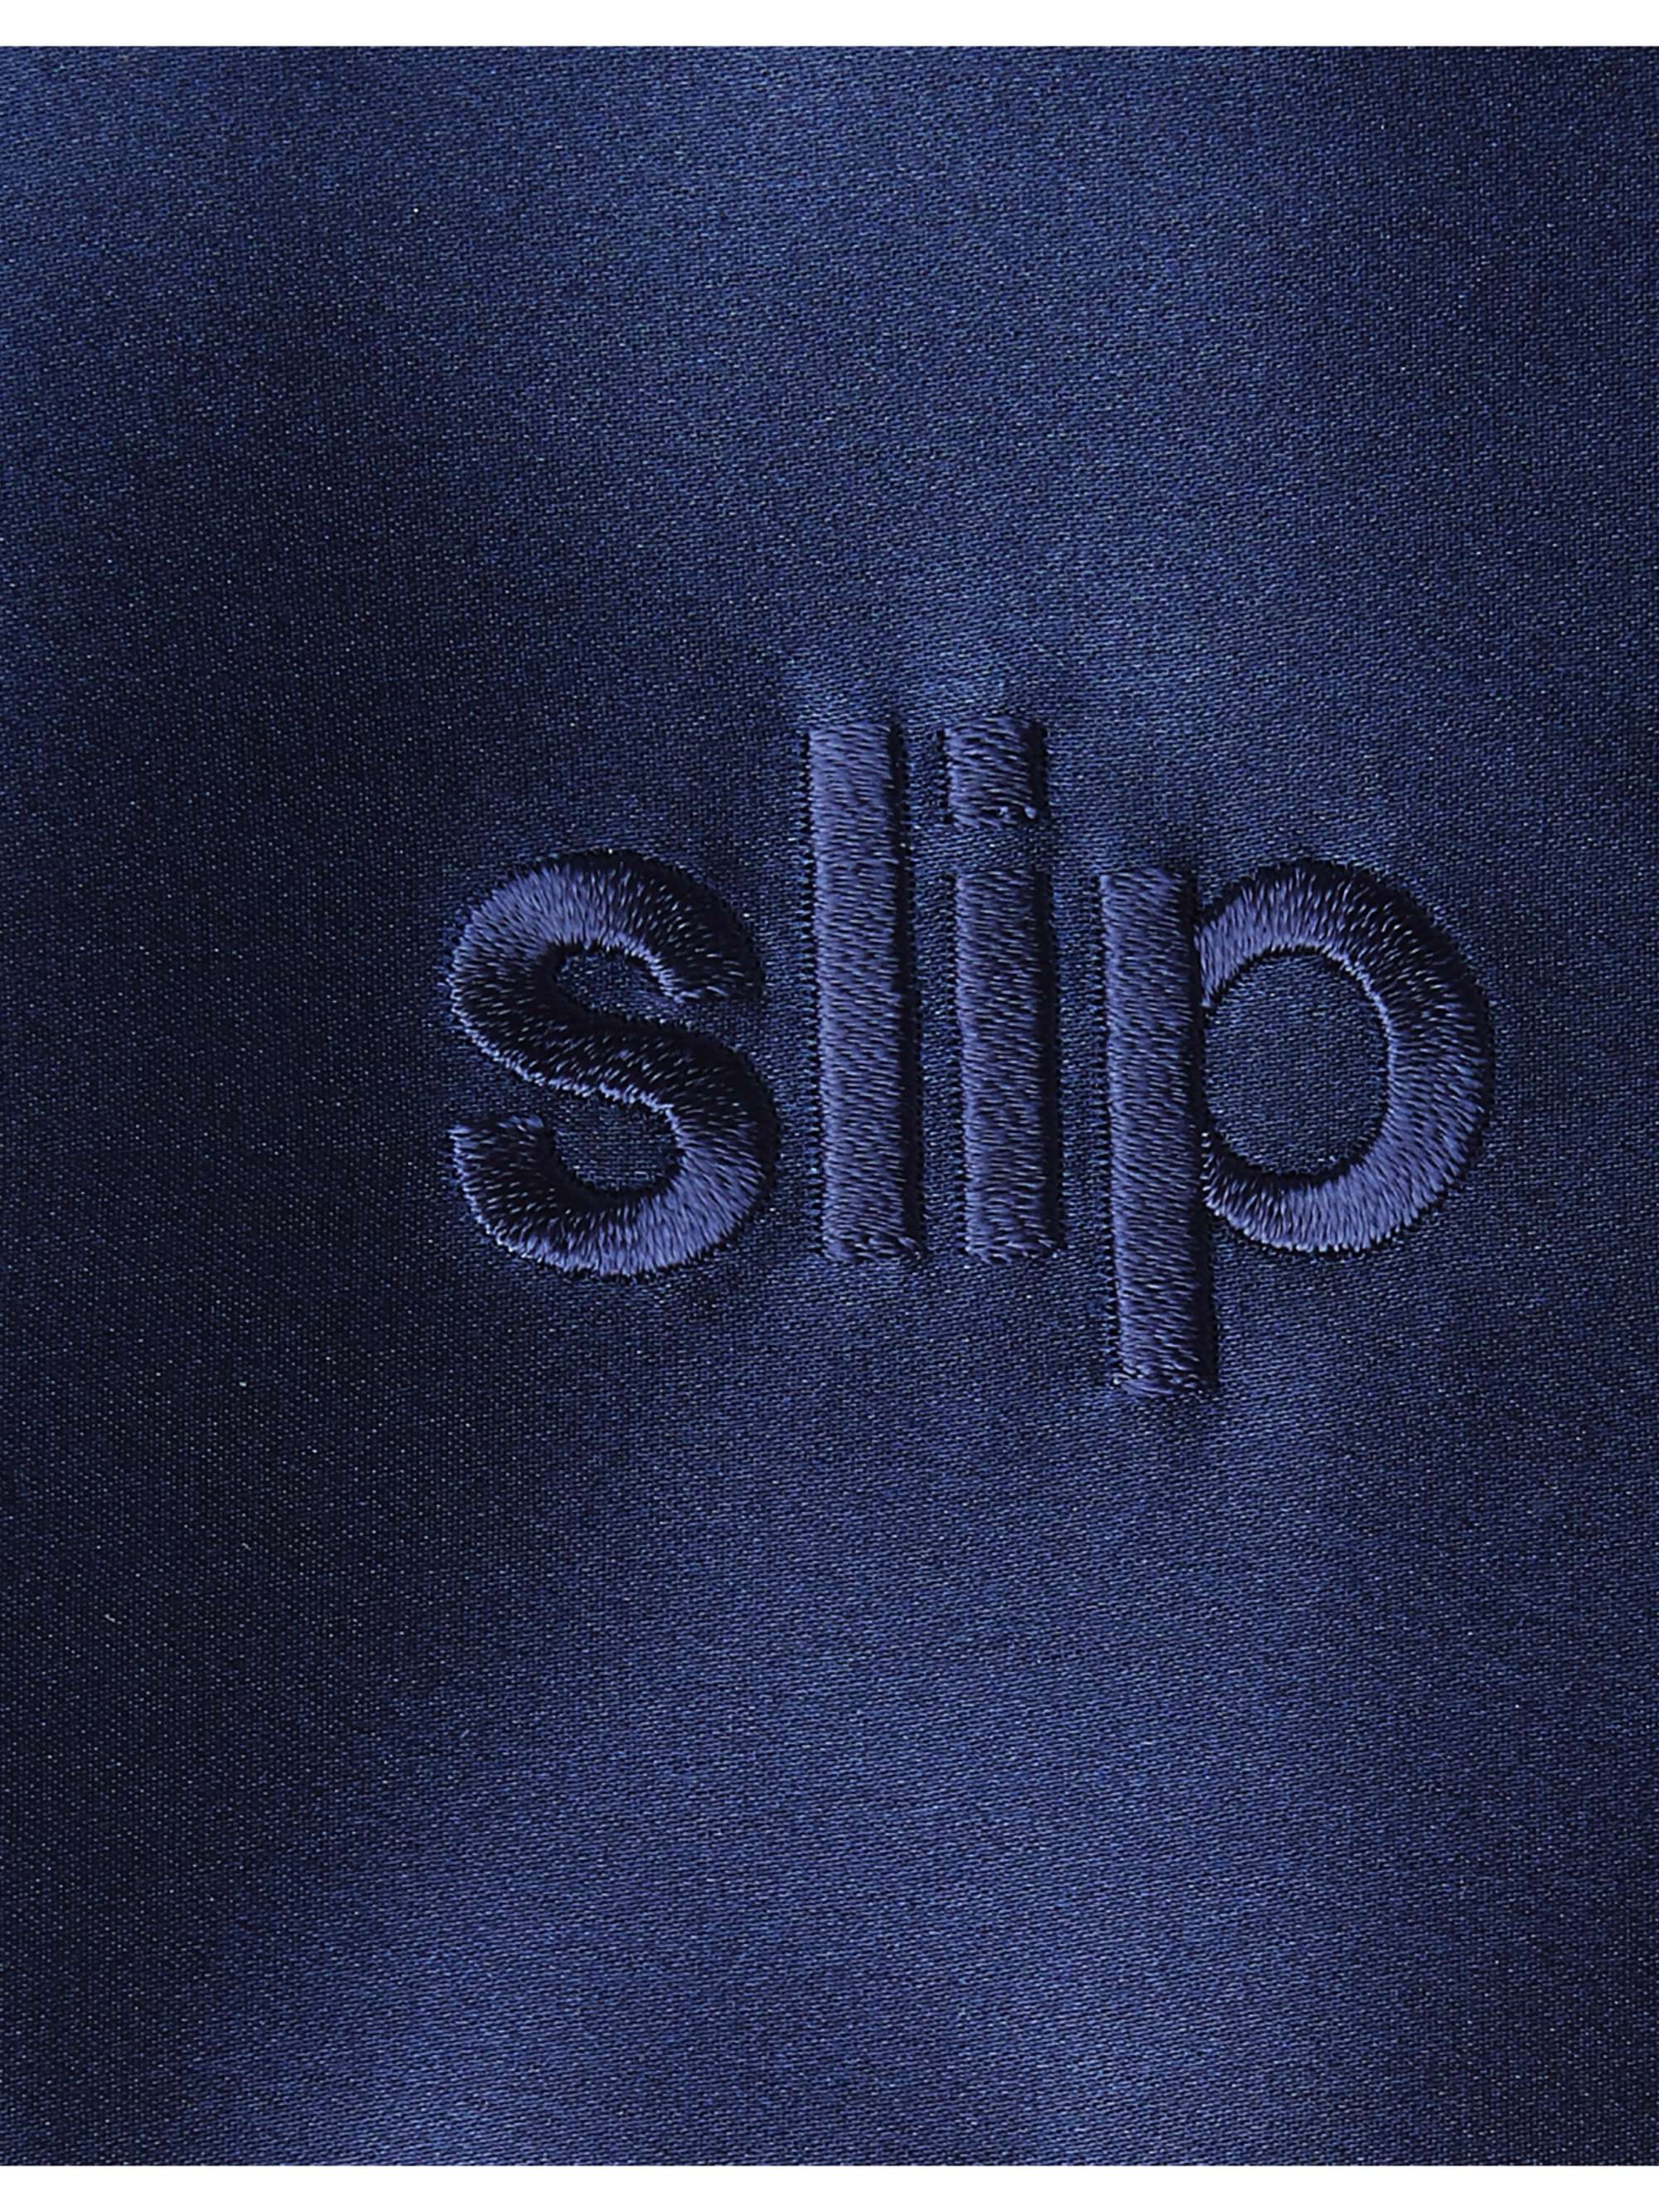 Slip Embroidered Mulberry Slipsilk Queen Pillowcase